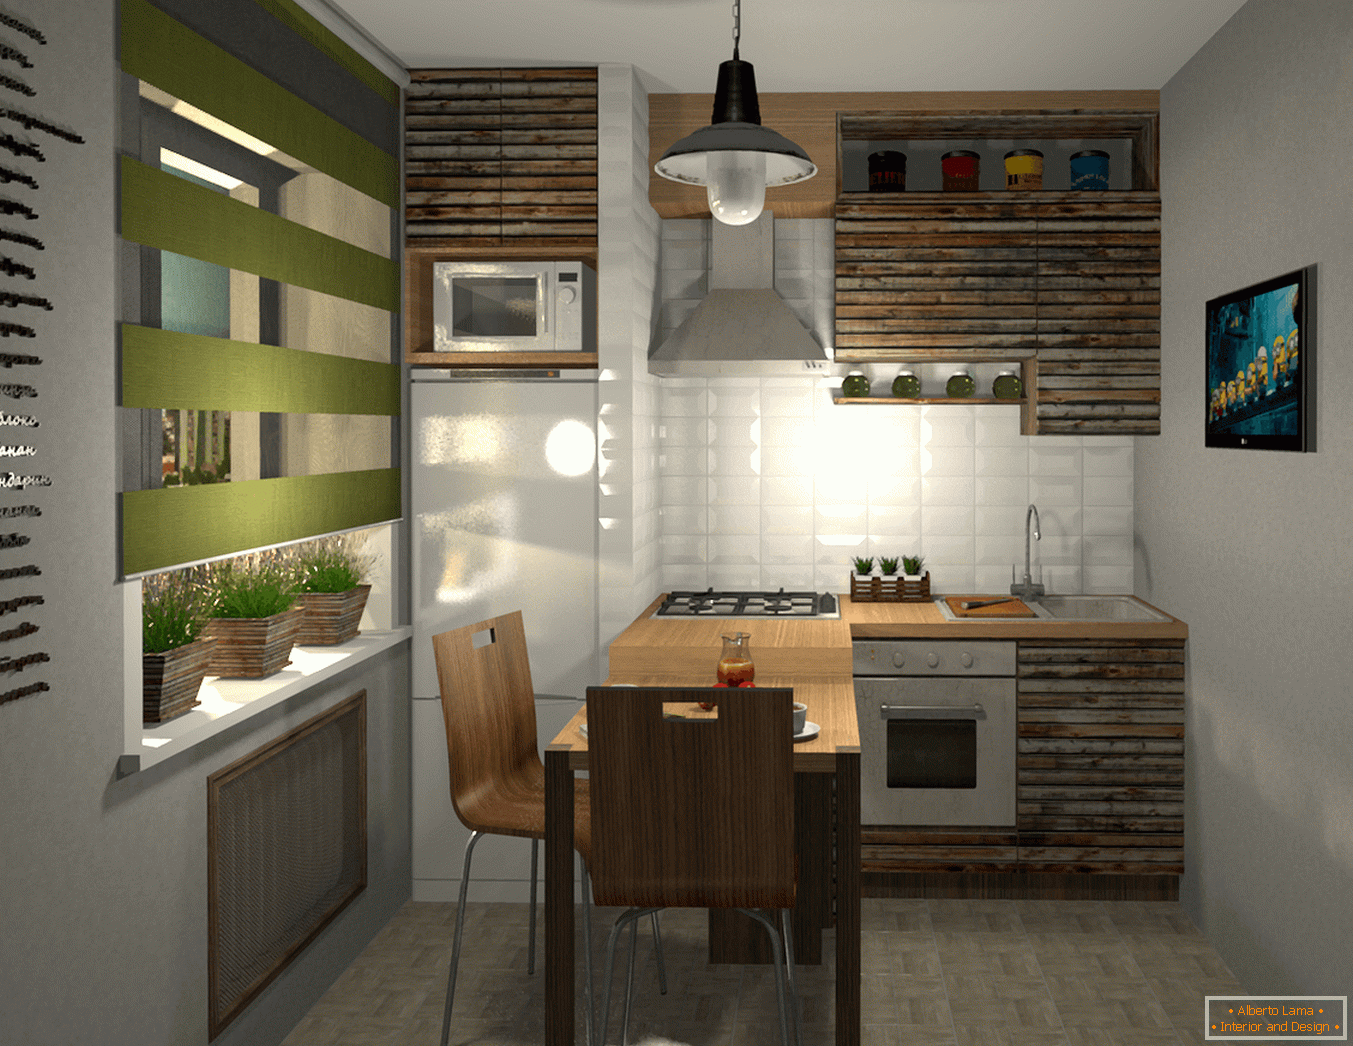 malogabaritnye-kitchen-design-2016